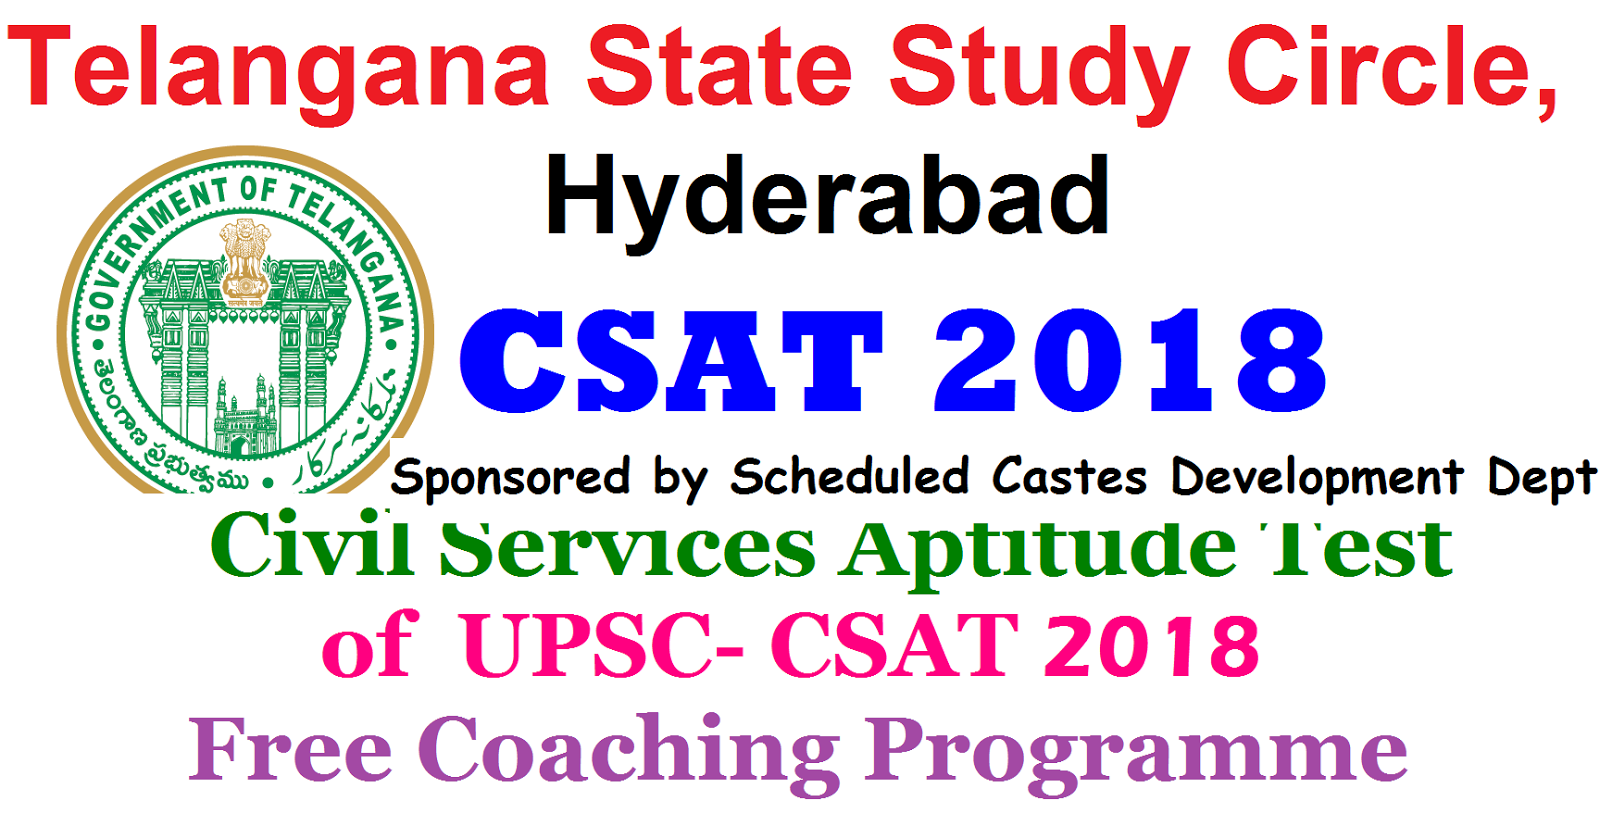 CSAT 2018 Civil Services Aptitude Test Of UPSC Free Coaching Programme At T S Study Circle